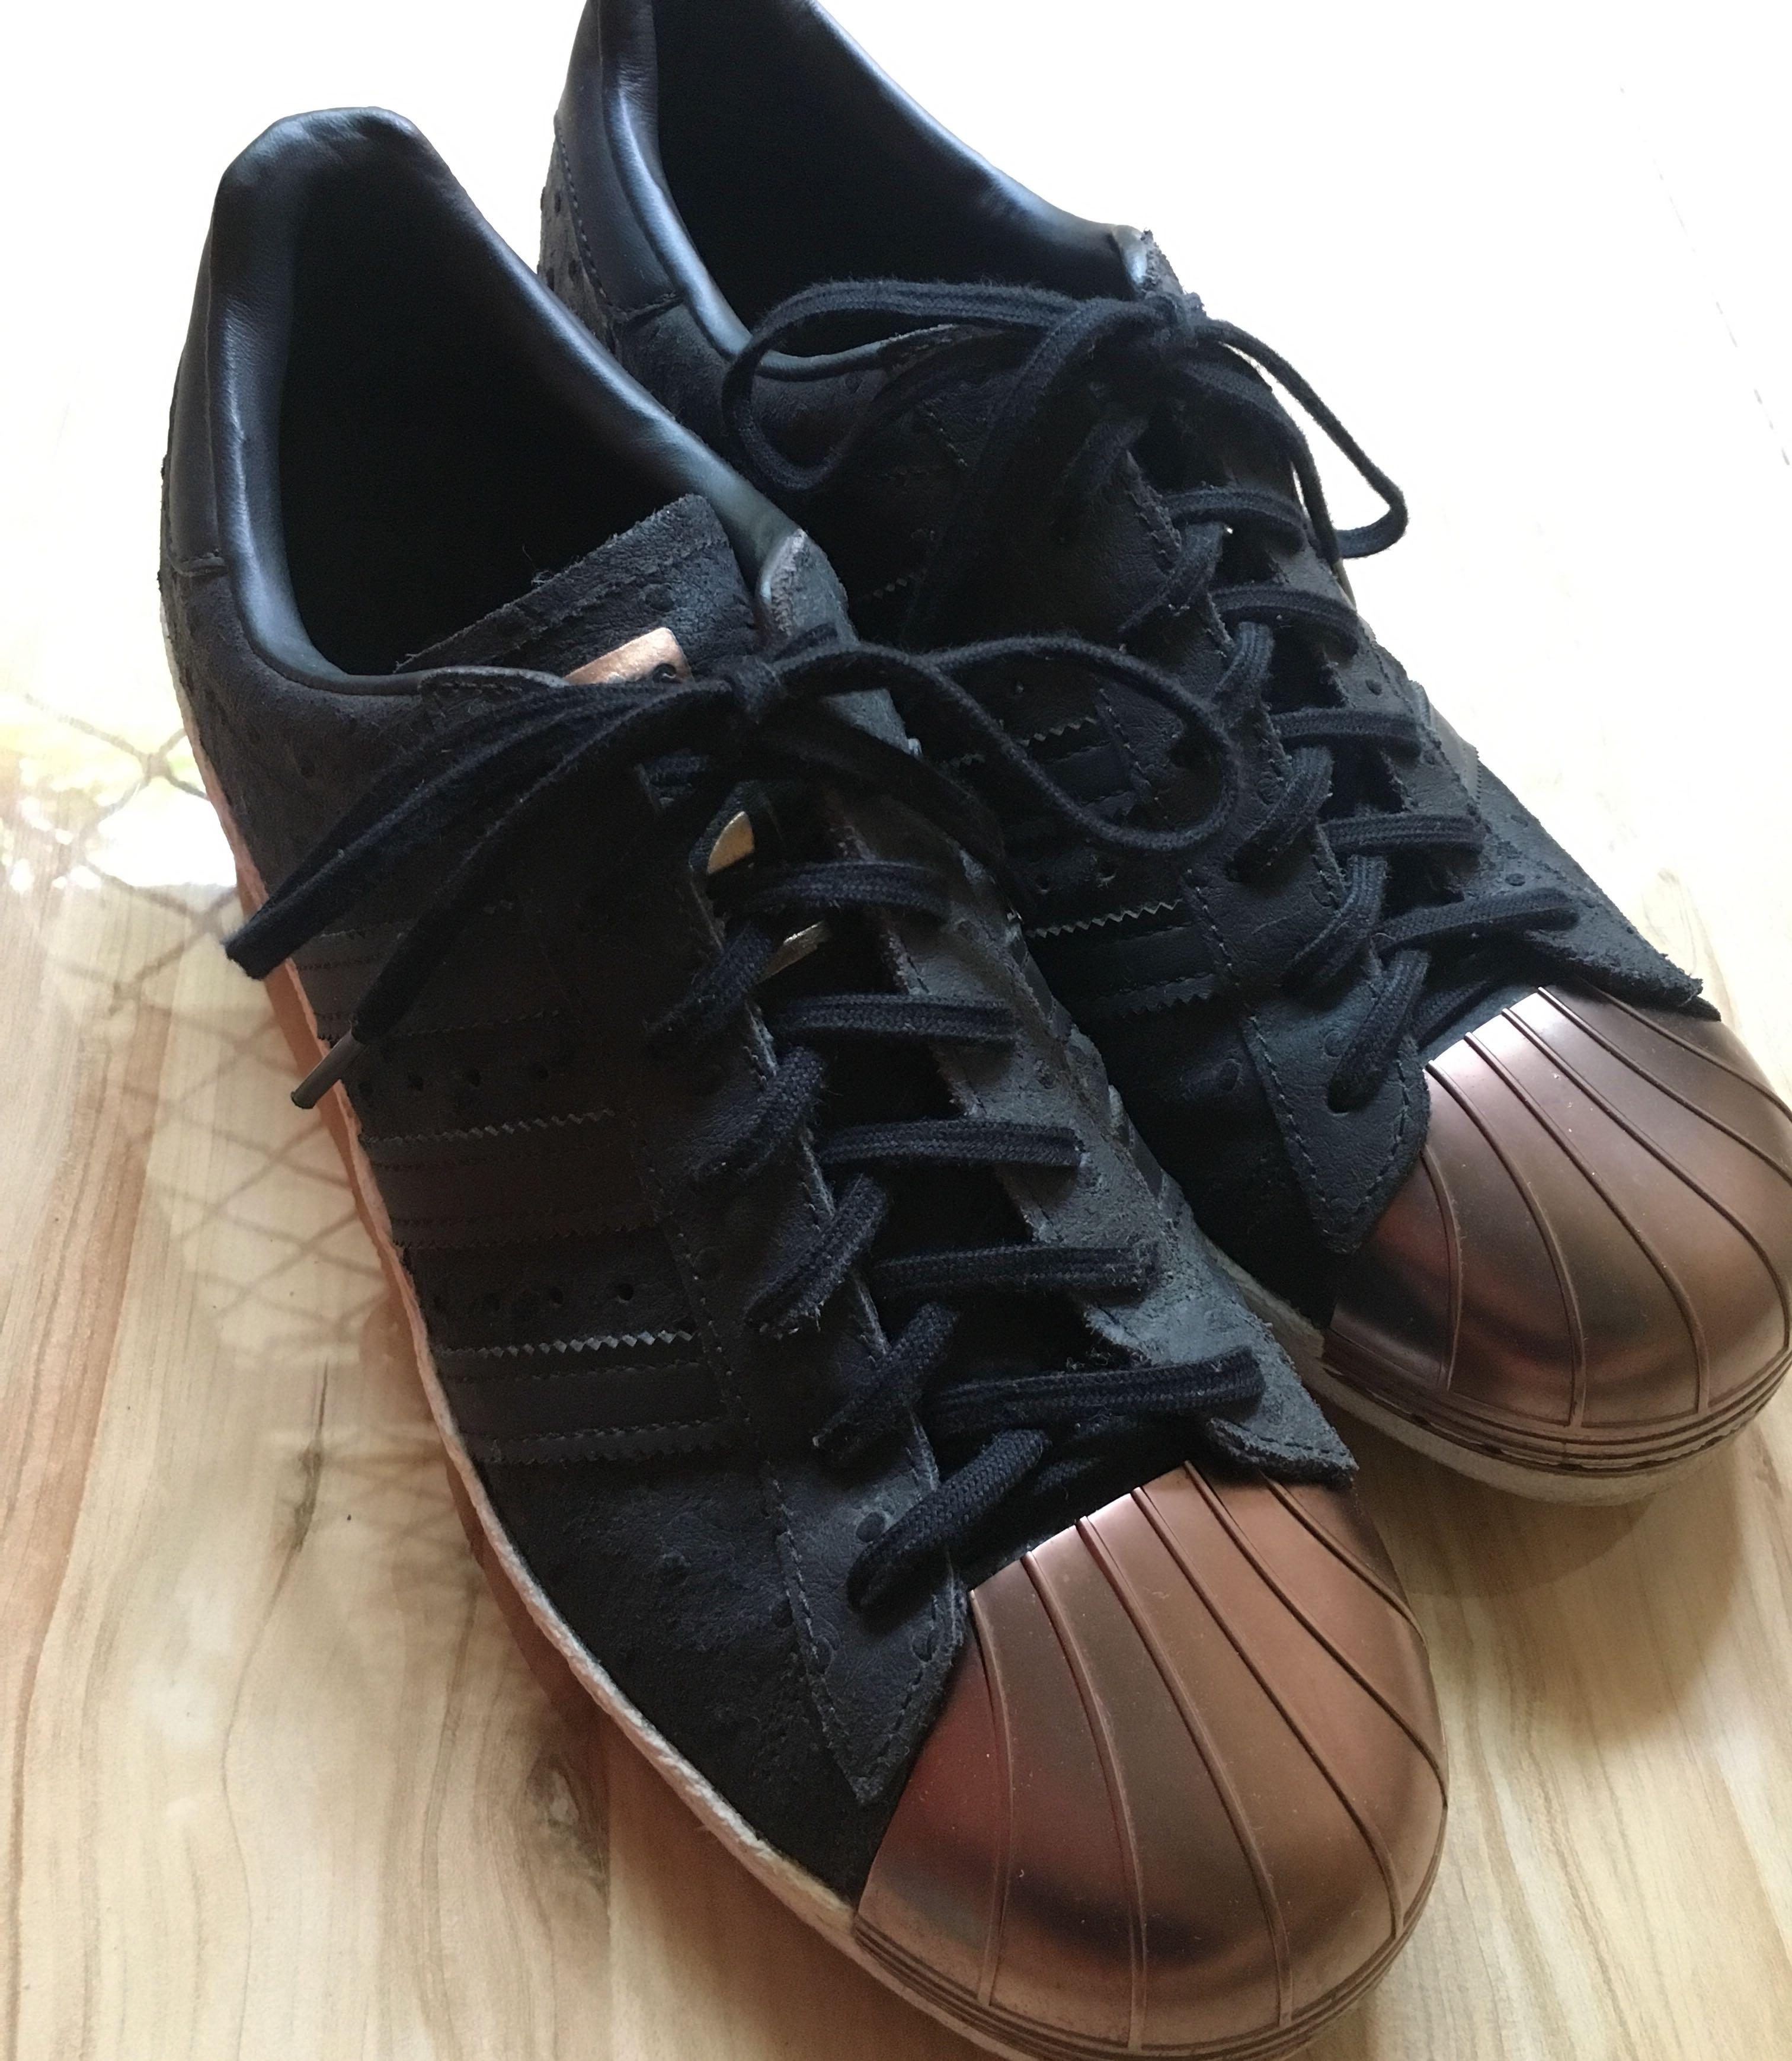 black rose gold adidas shoes